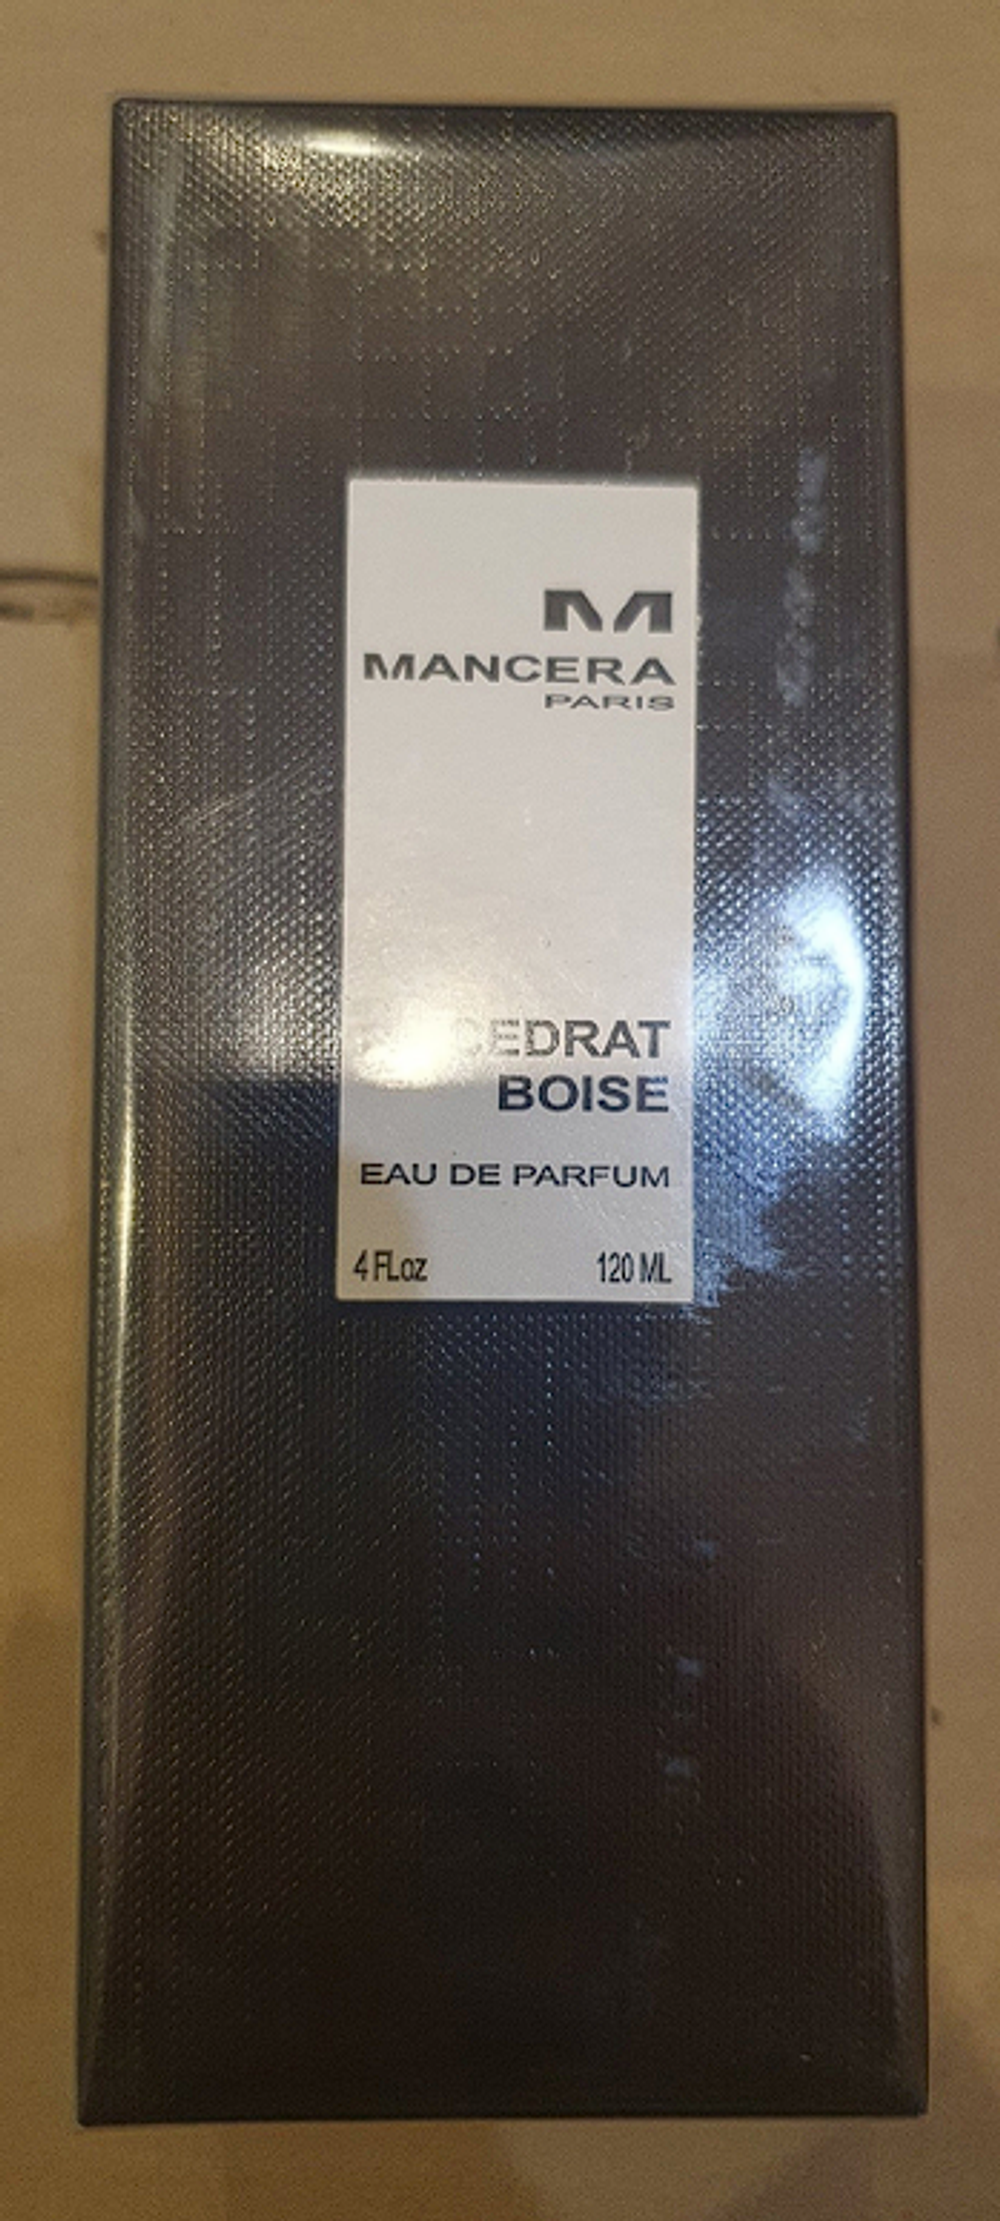 Mancera Cedrat Boise 120ml (duty free парфюмерия)